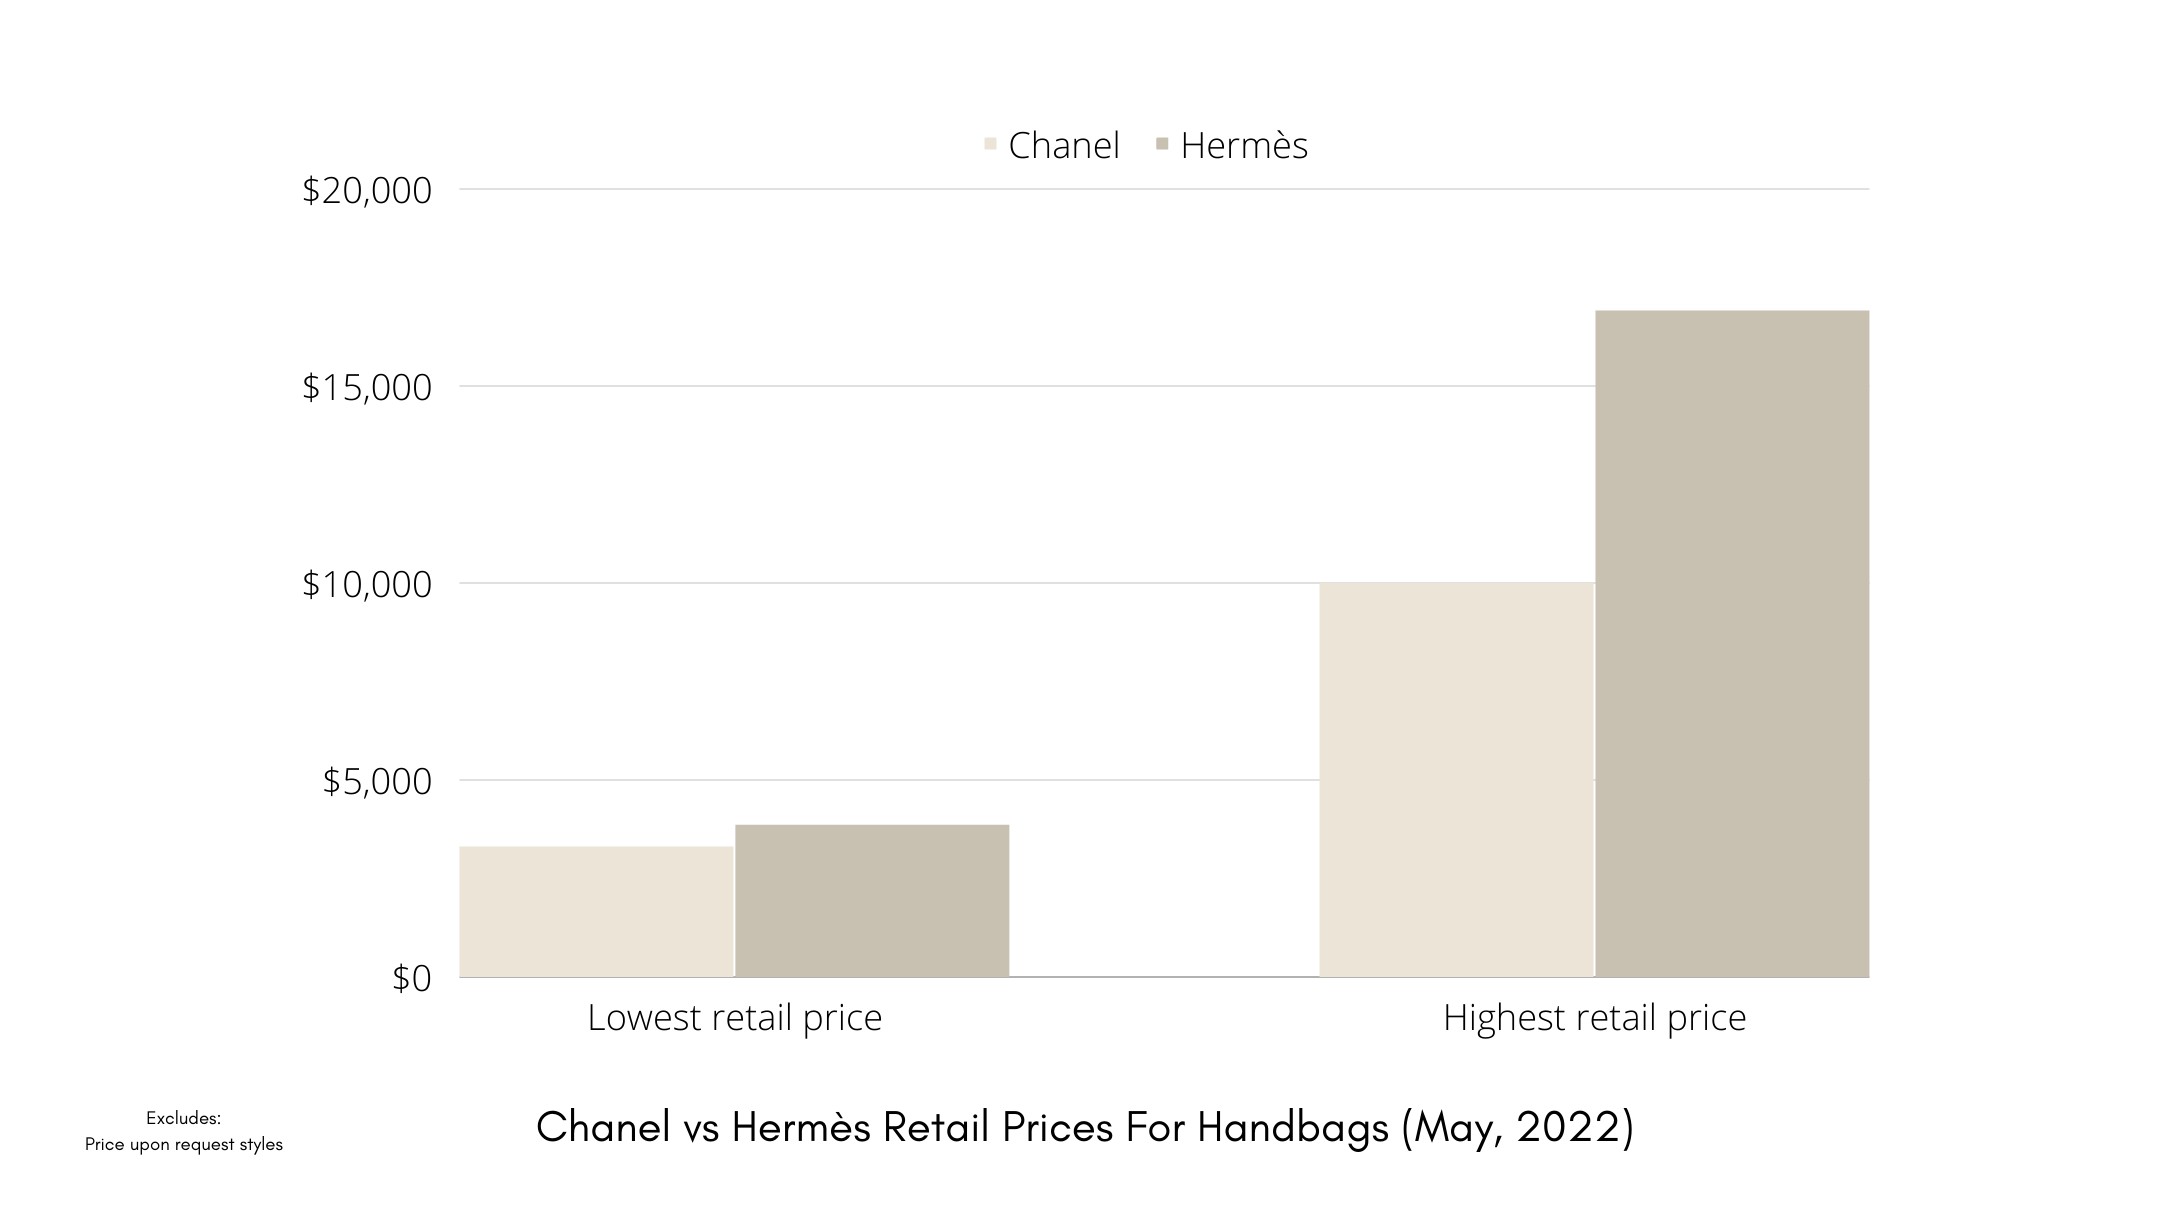 Hermès Handbag Buying Guide, myGemma